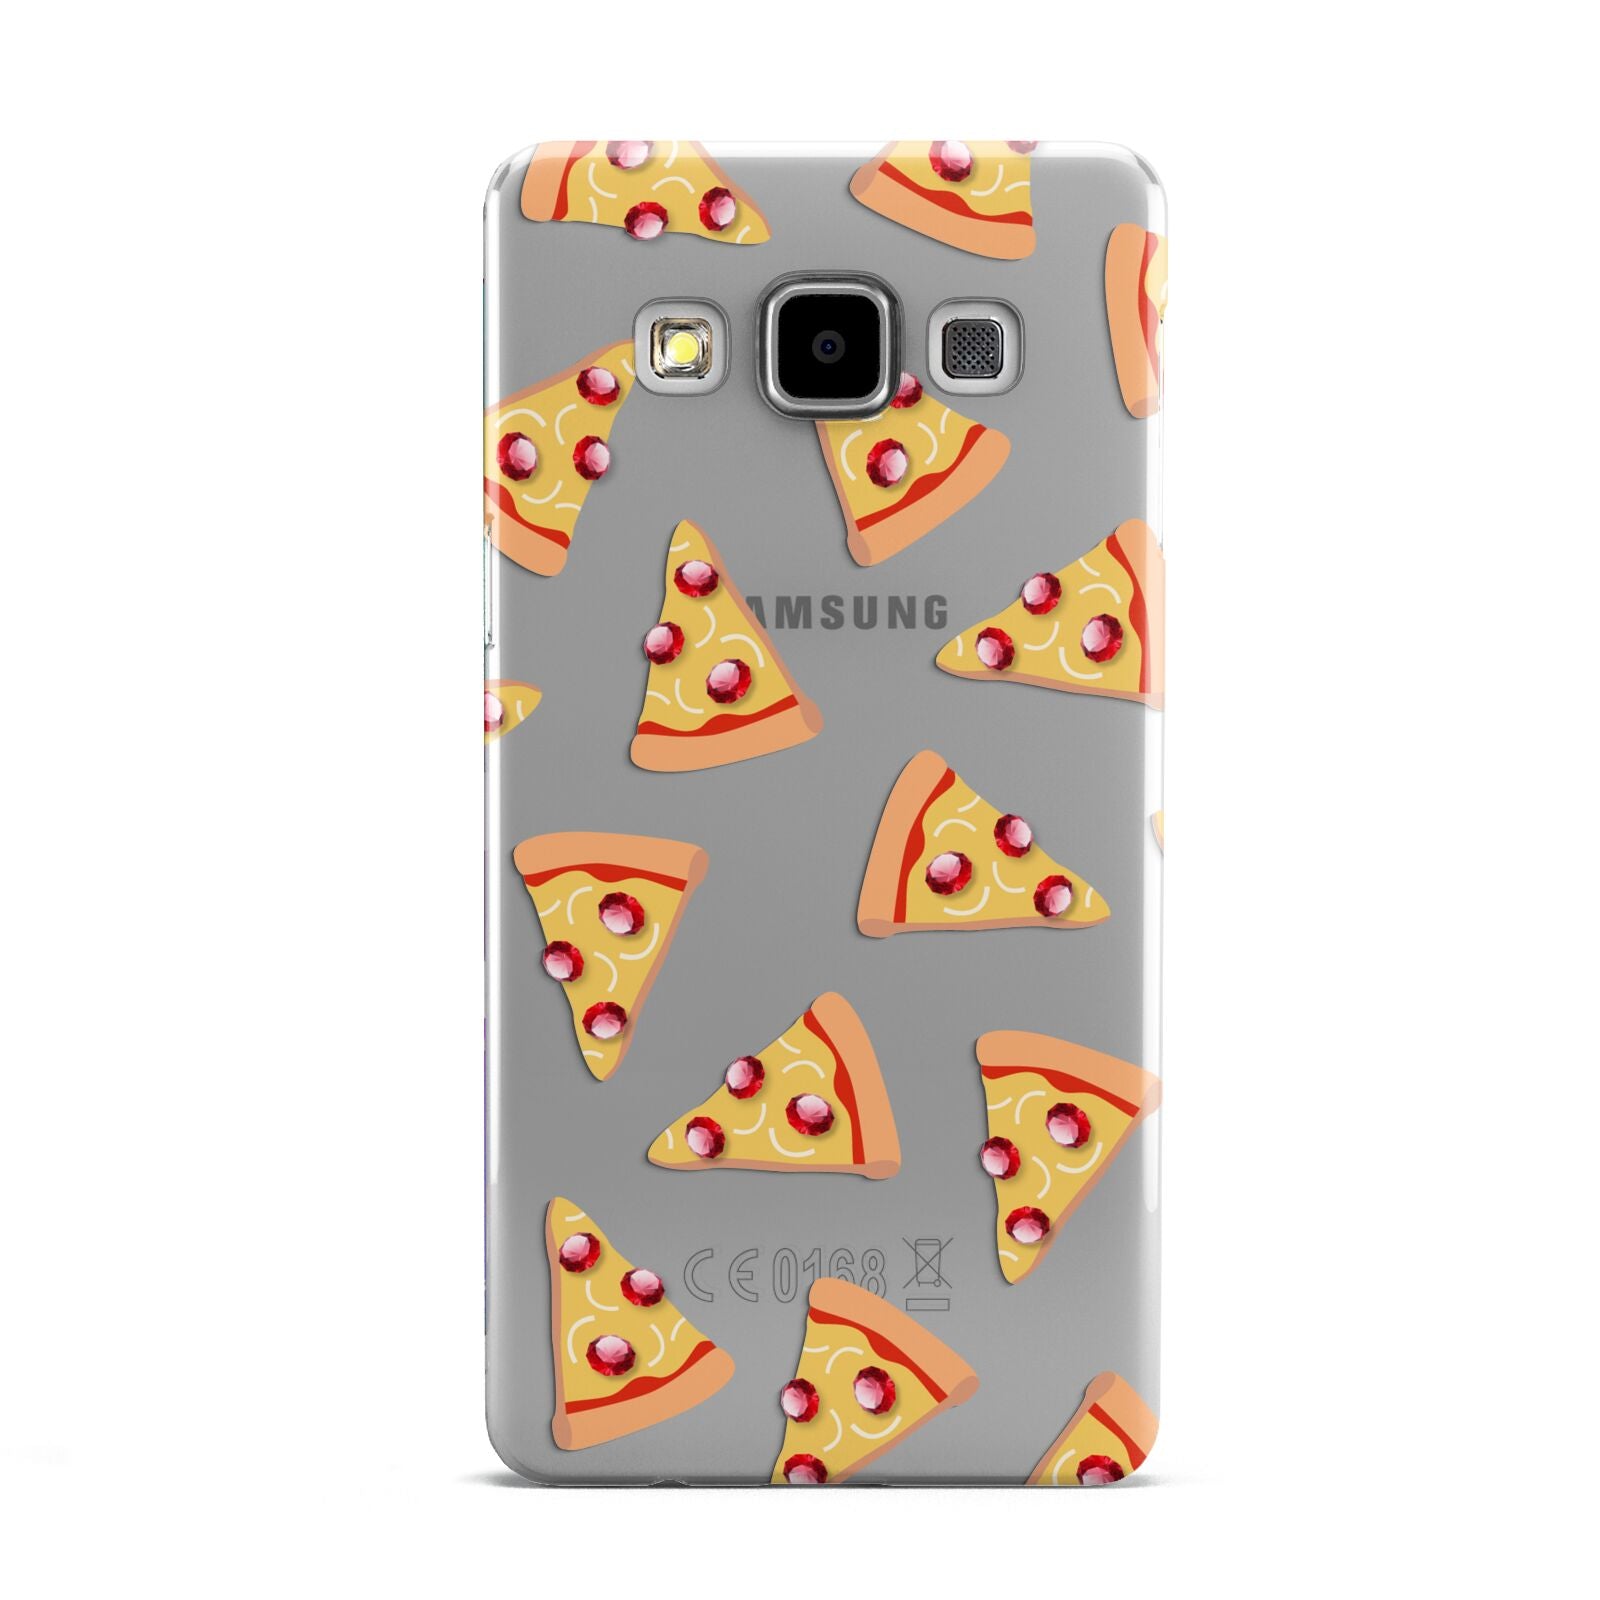 Rubies on Cartoon Pizza Slices Samsung Galaxy A5 Case